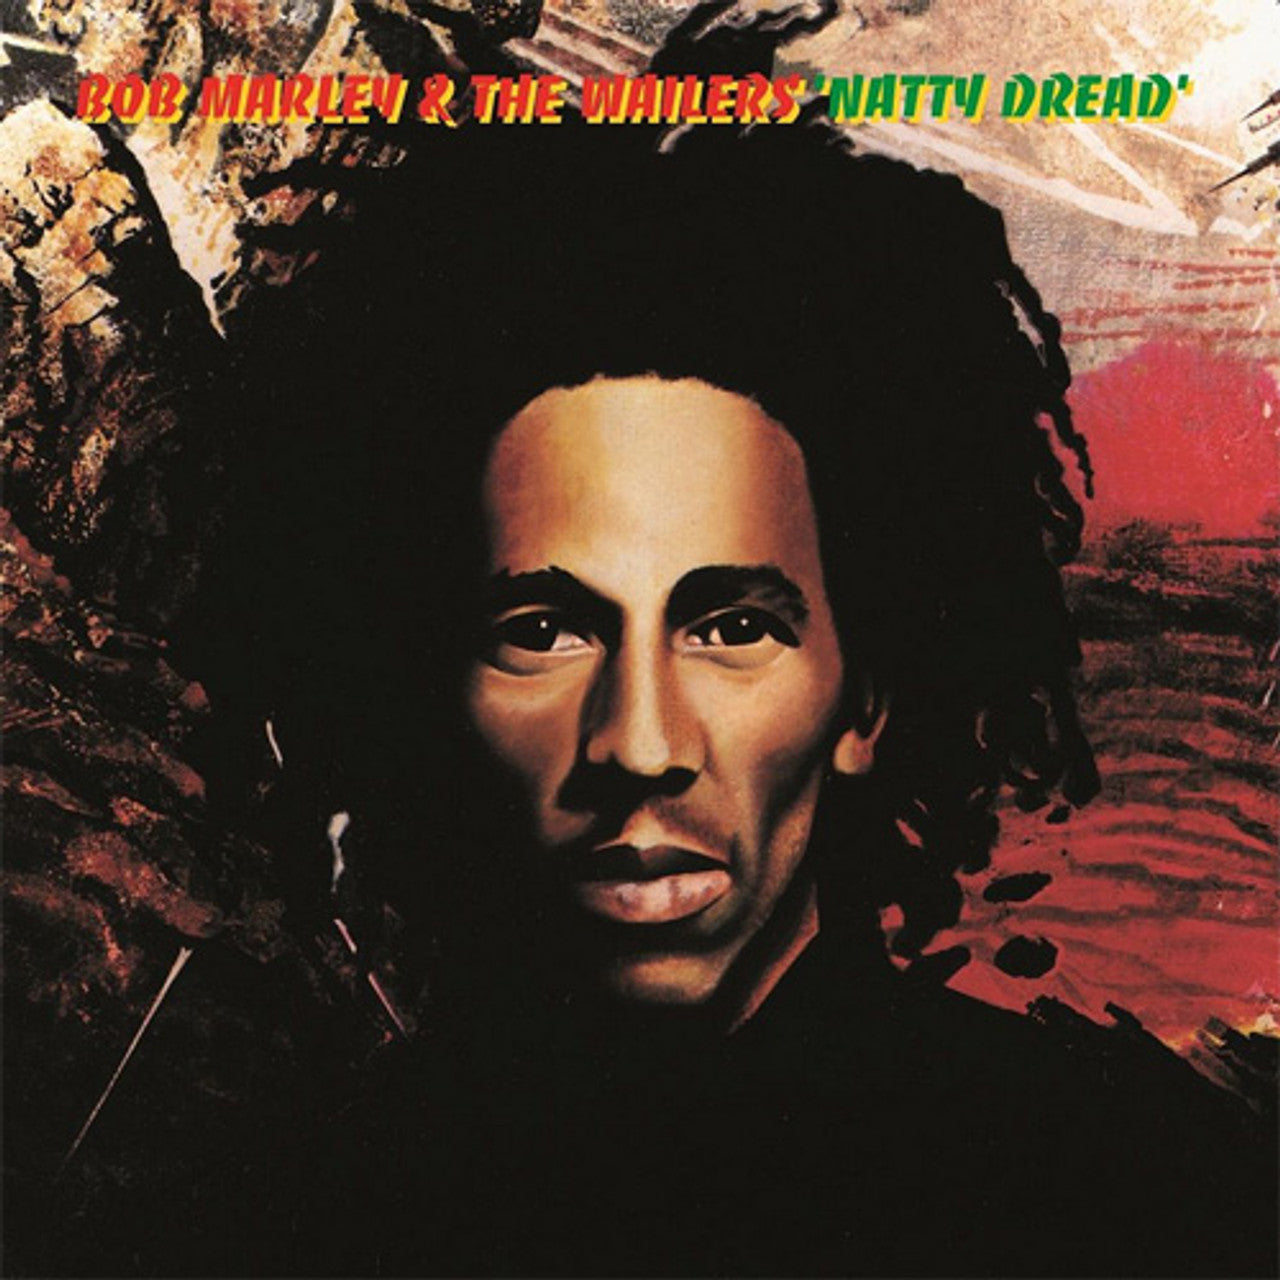 Bob Marley &amp; the Wailers - Natty Dread - Tuff Gong LP